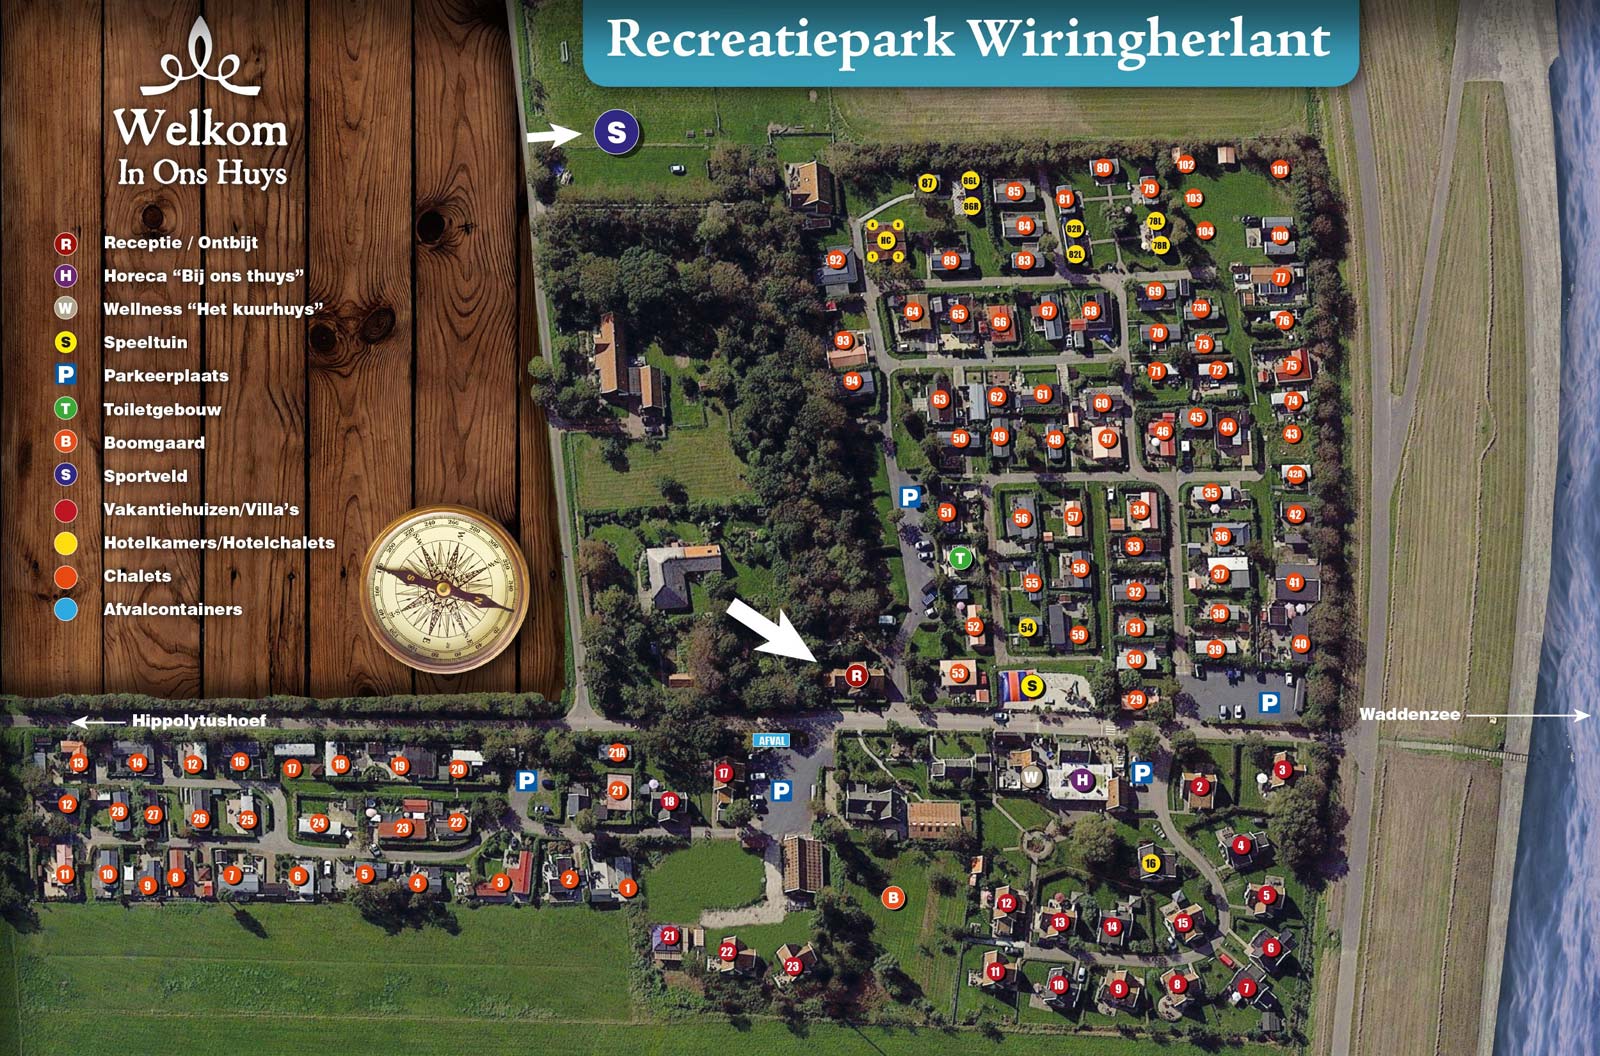 plattegrond-recreatiepark-wiringherlant-q40-1600-1056.jpg